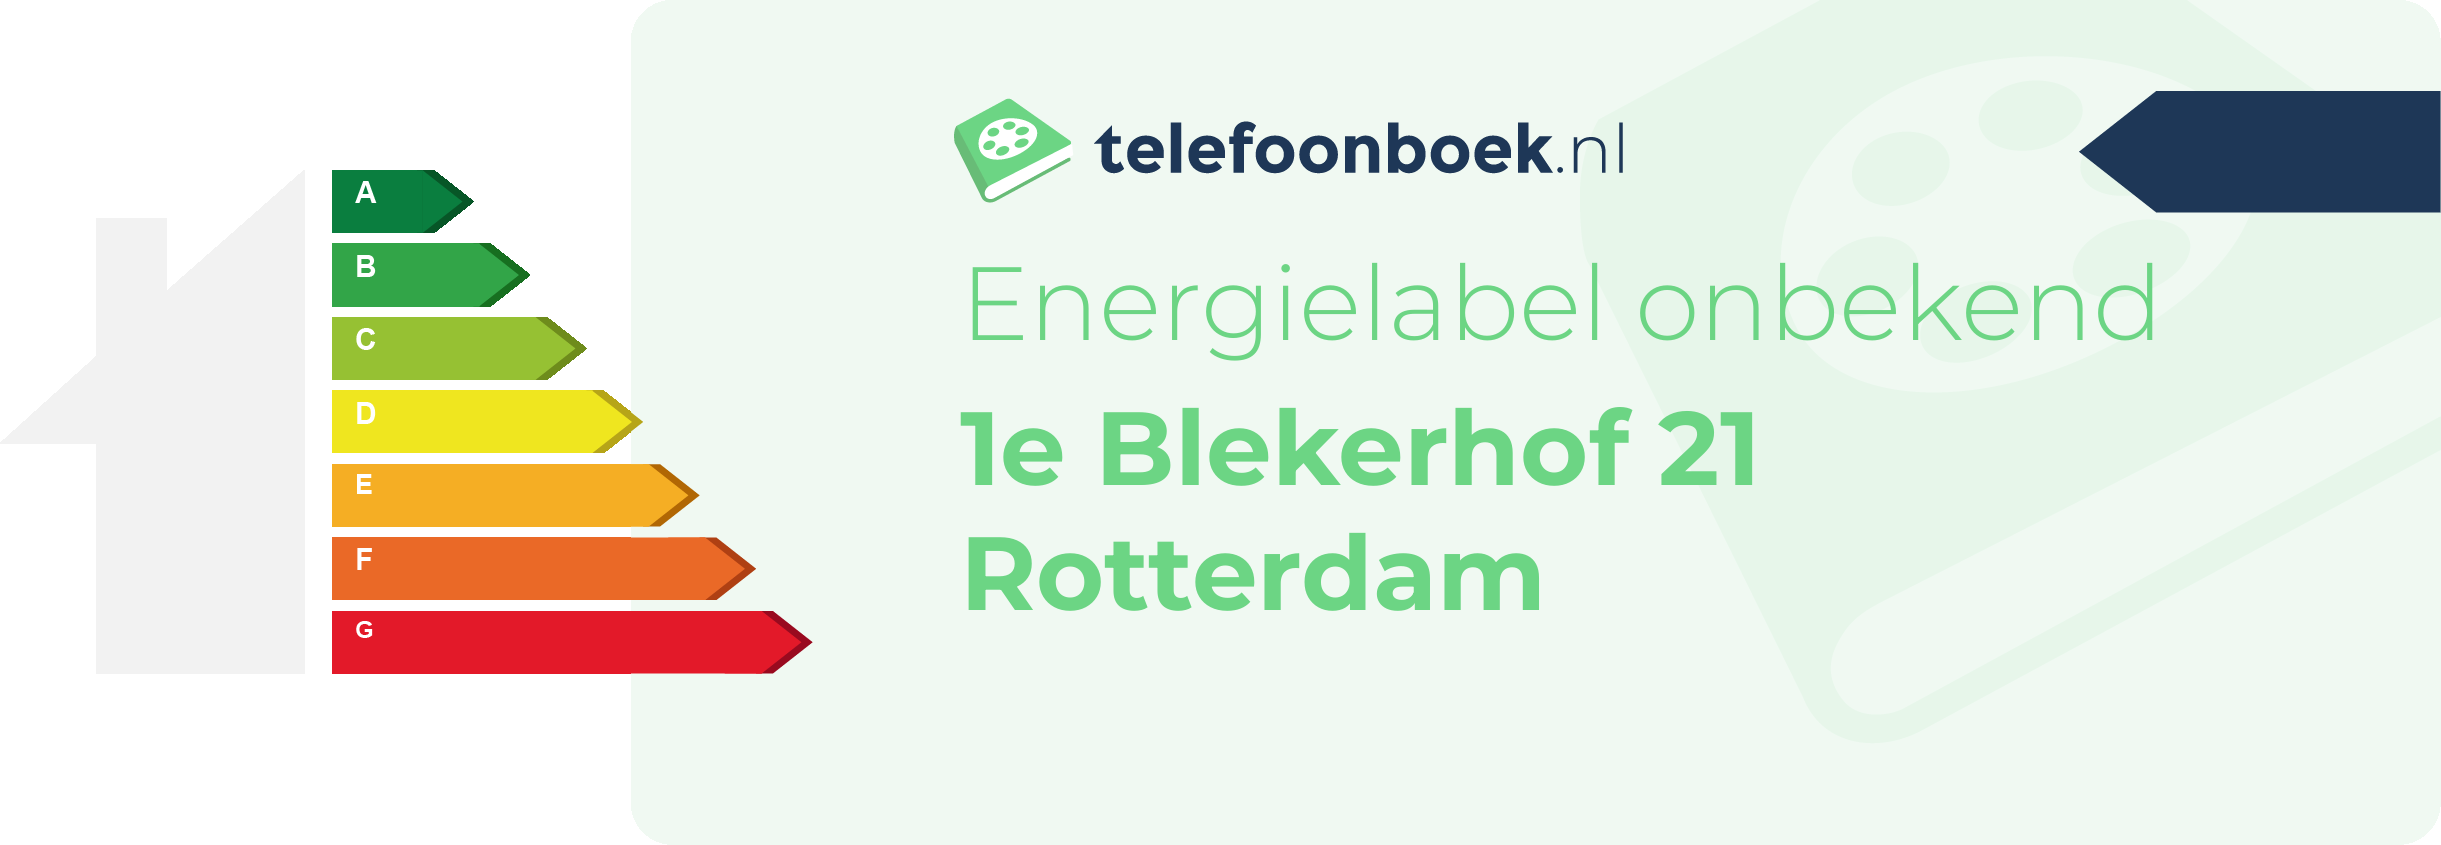 Energielabel 1e Blekerhof 21 Rotterdam